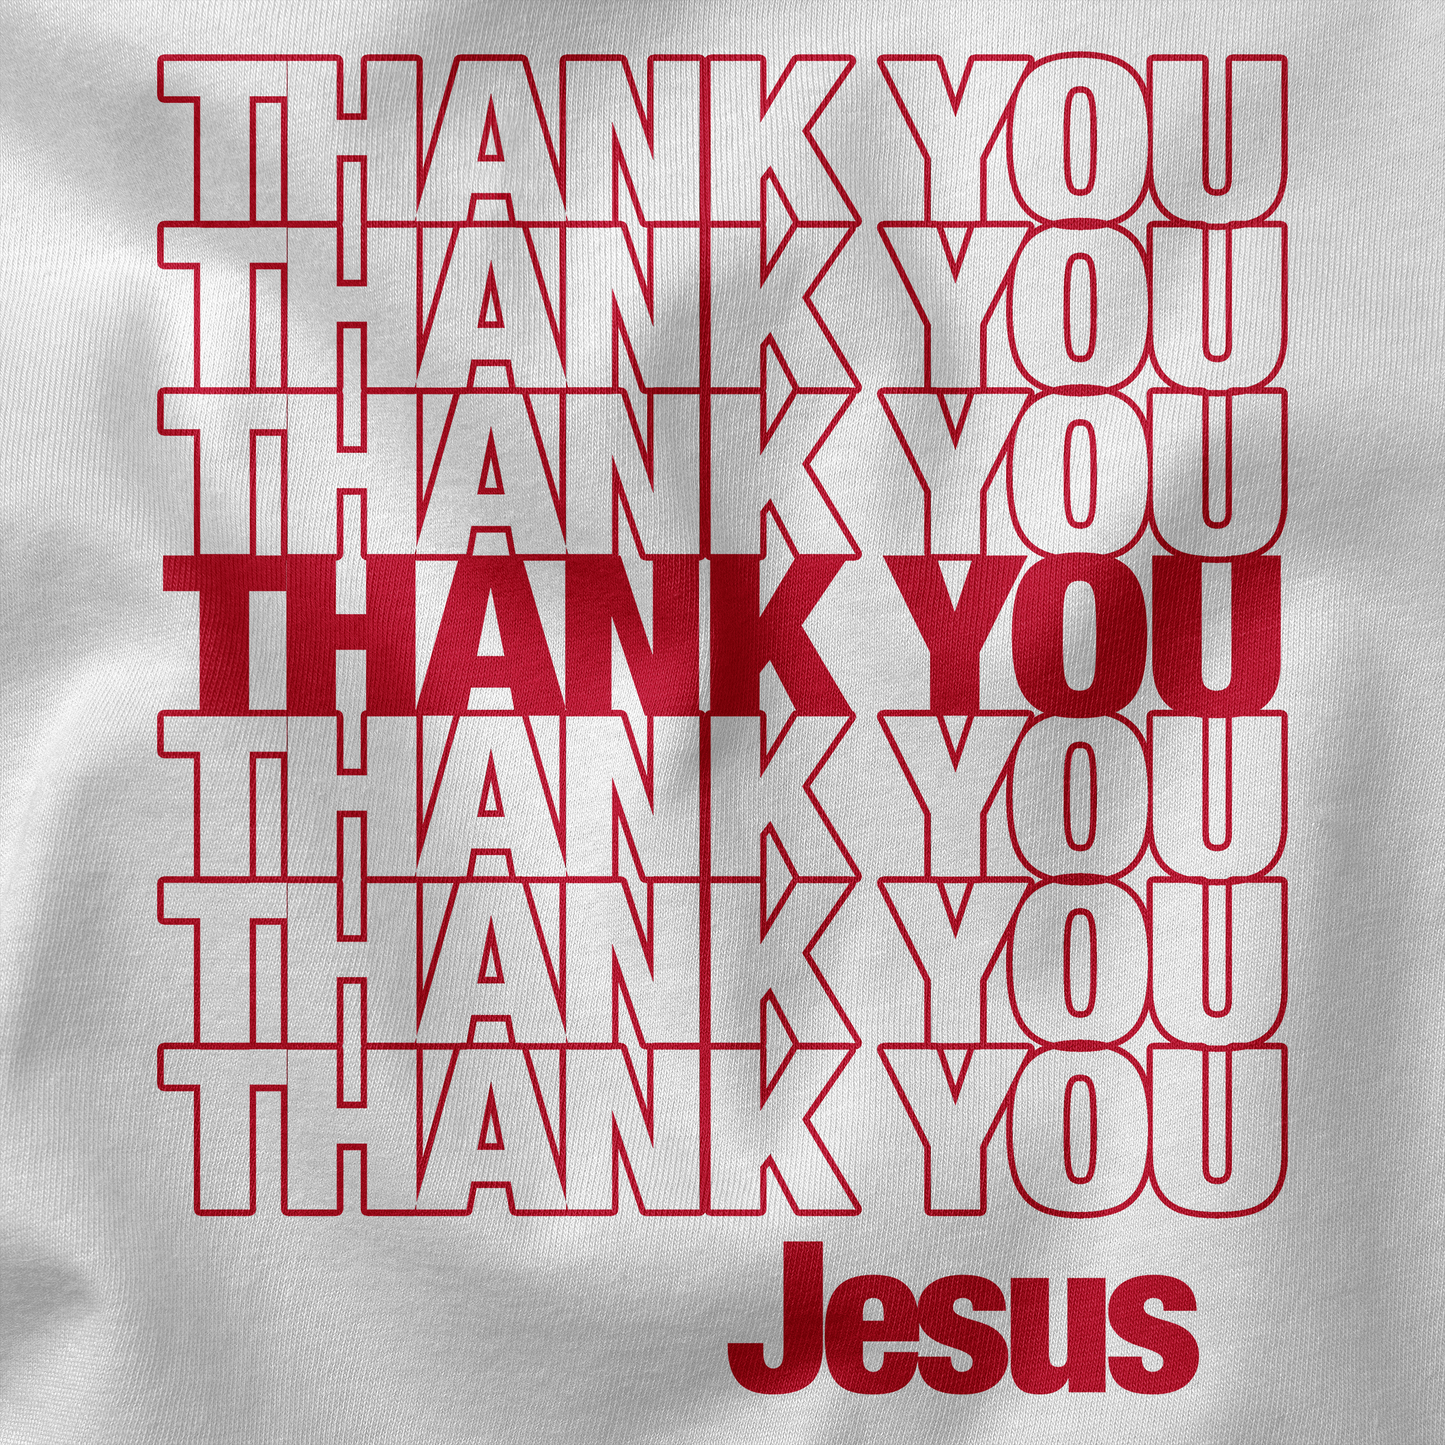 Thank you Jesus shopping bag t-shirt design closeup